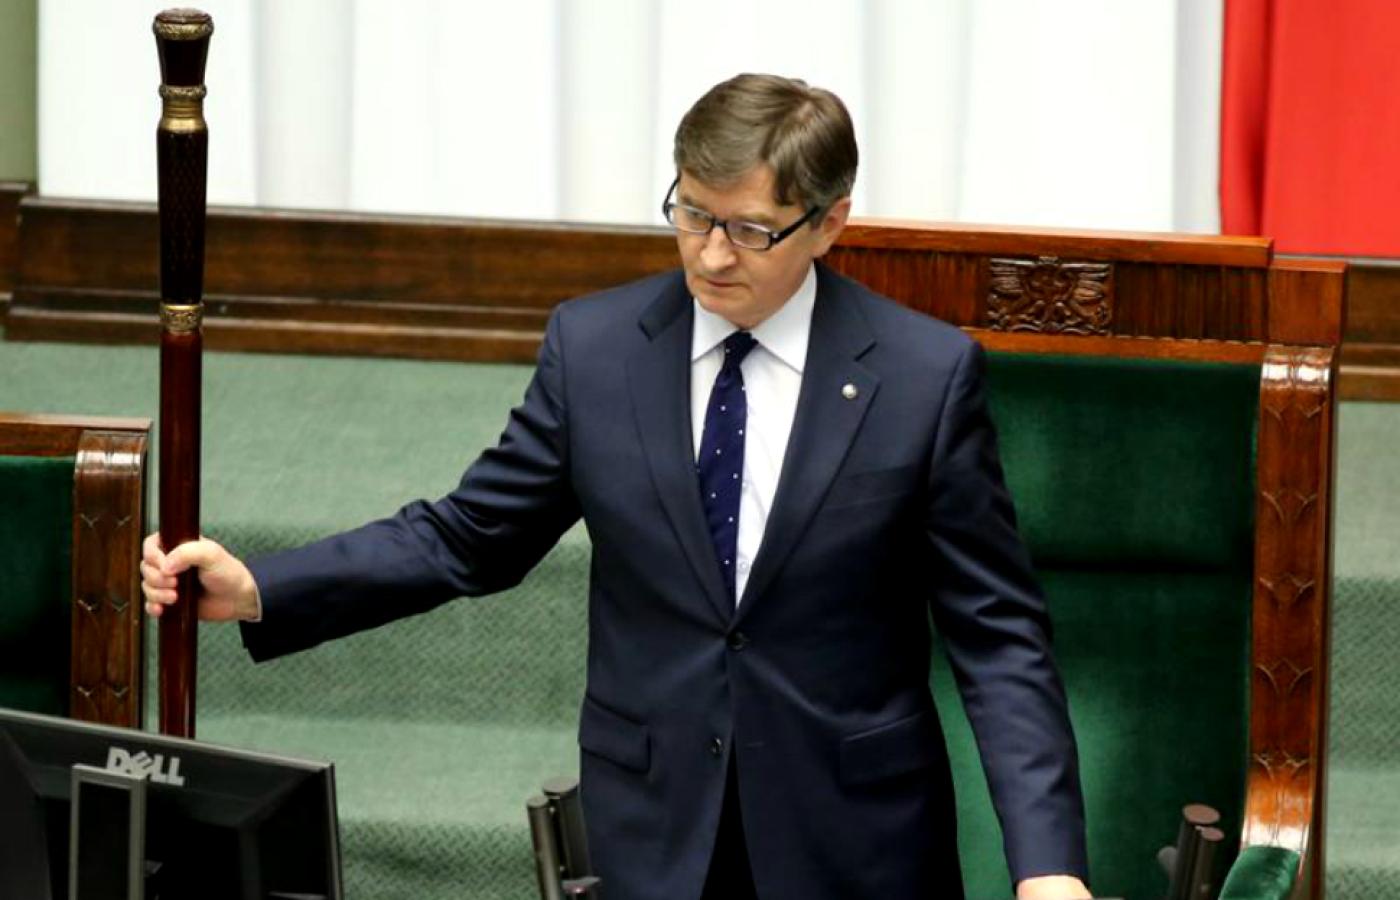 Marszałek Sejmu Marek Kuchciński